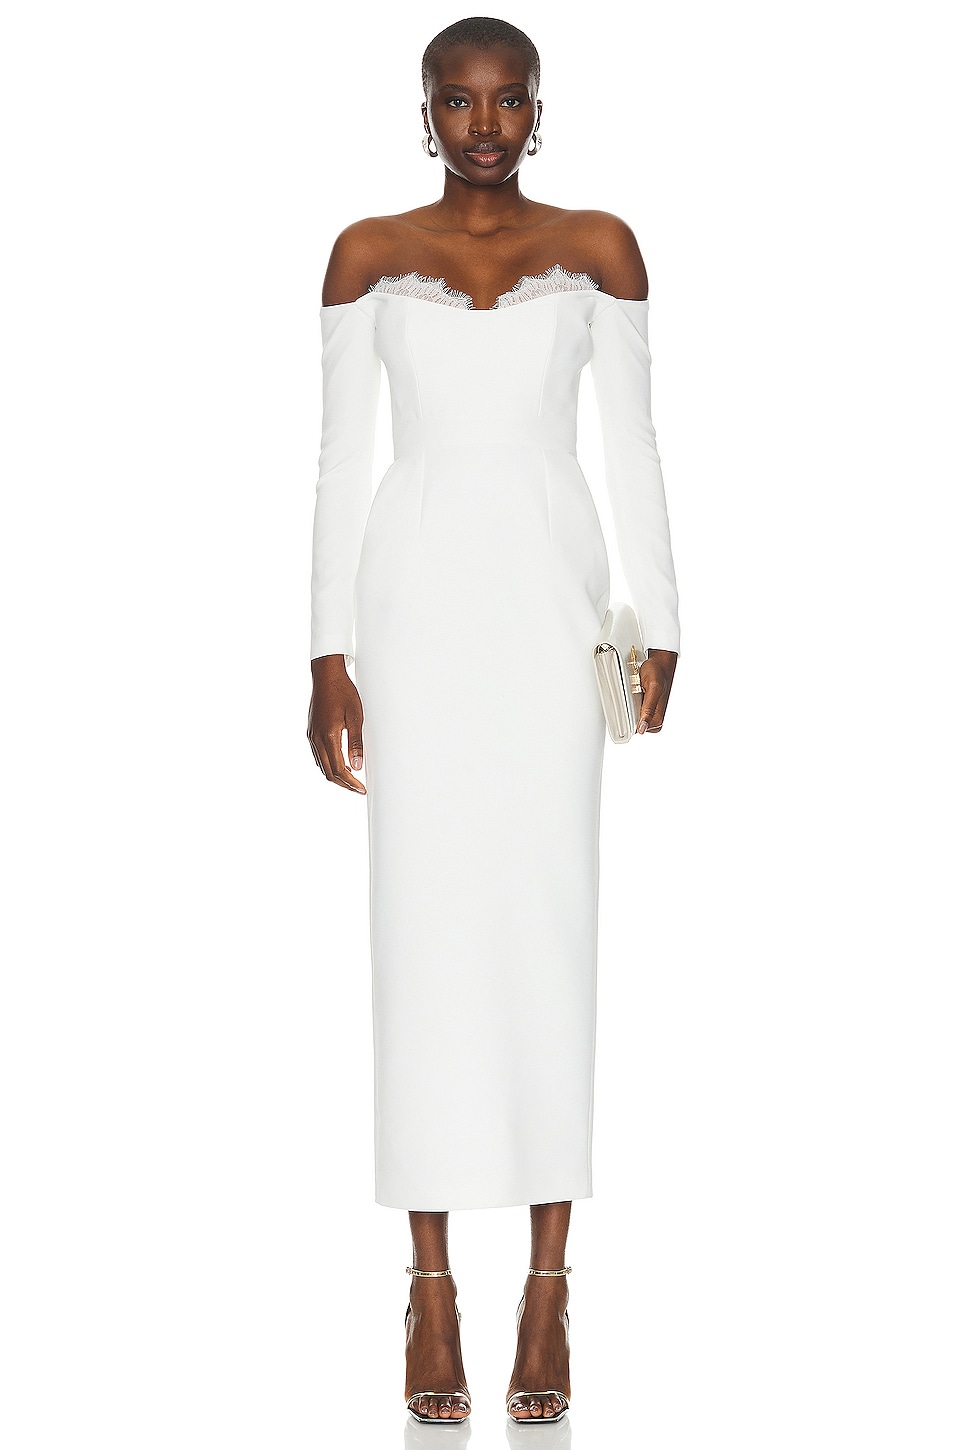 Farah Dress in White